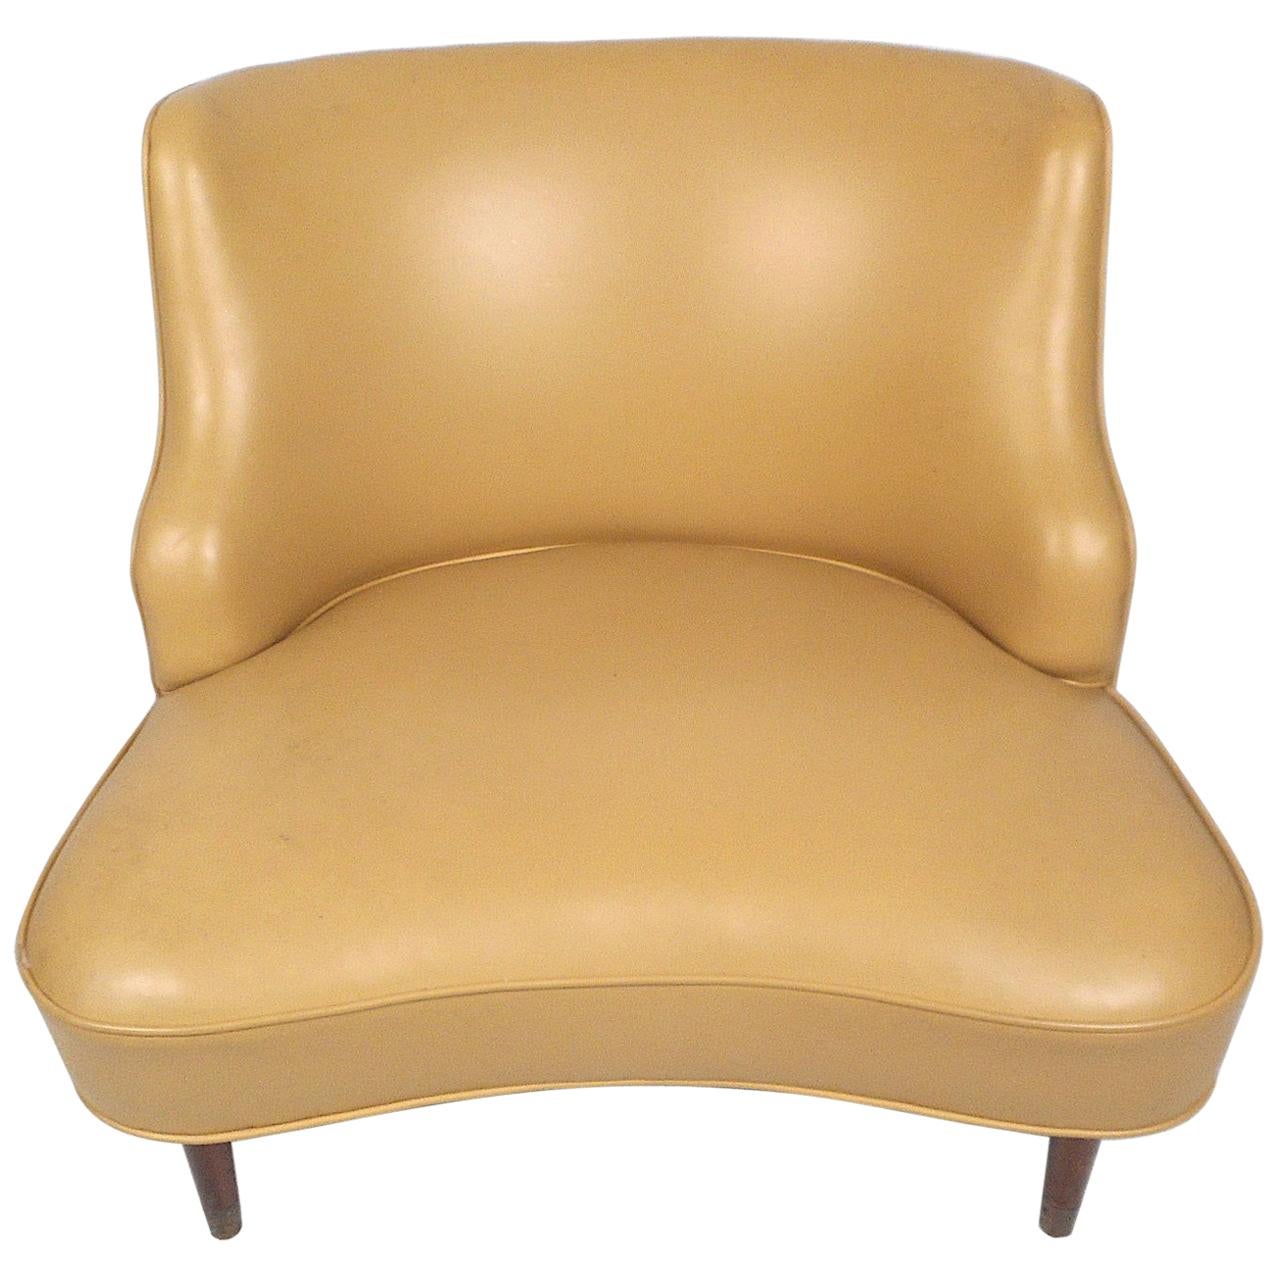 Mid-Century Modern Vinyl Lounge Chair